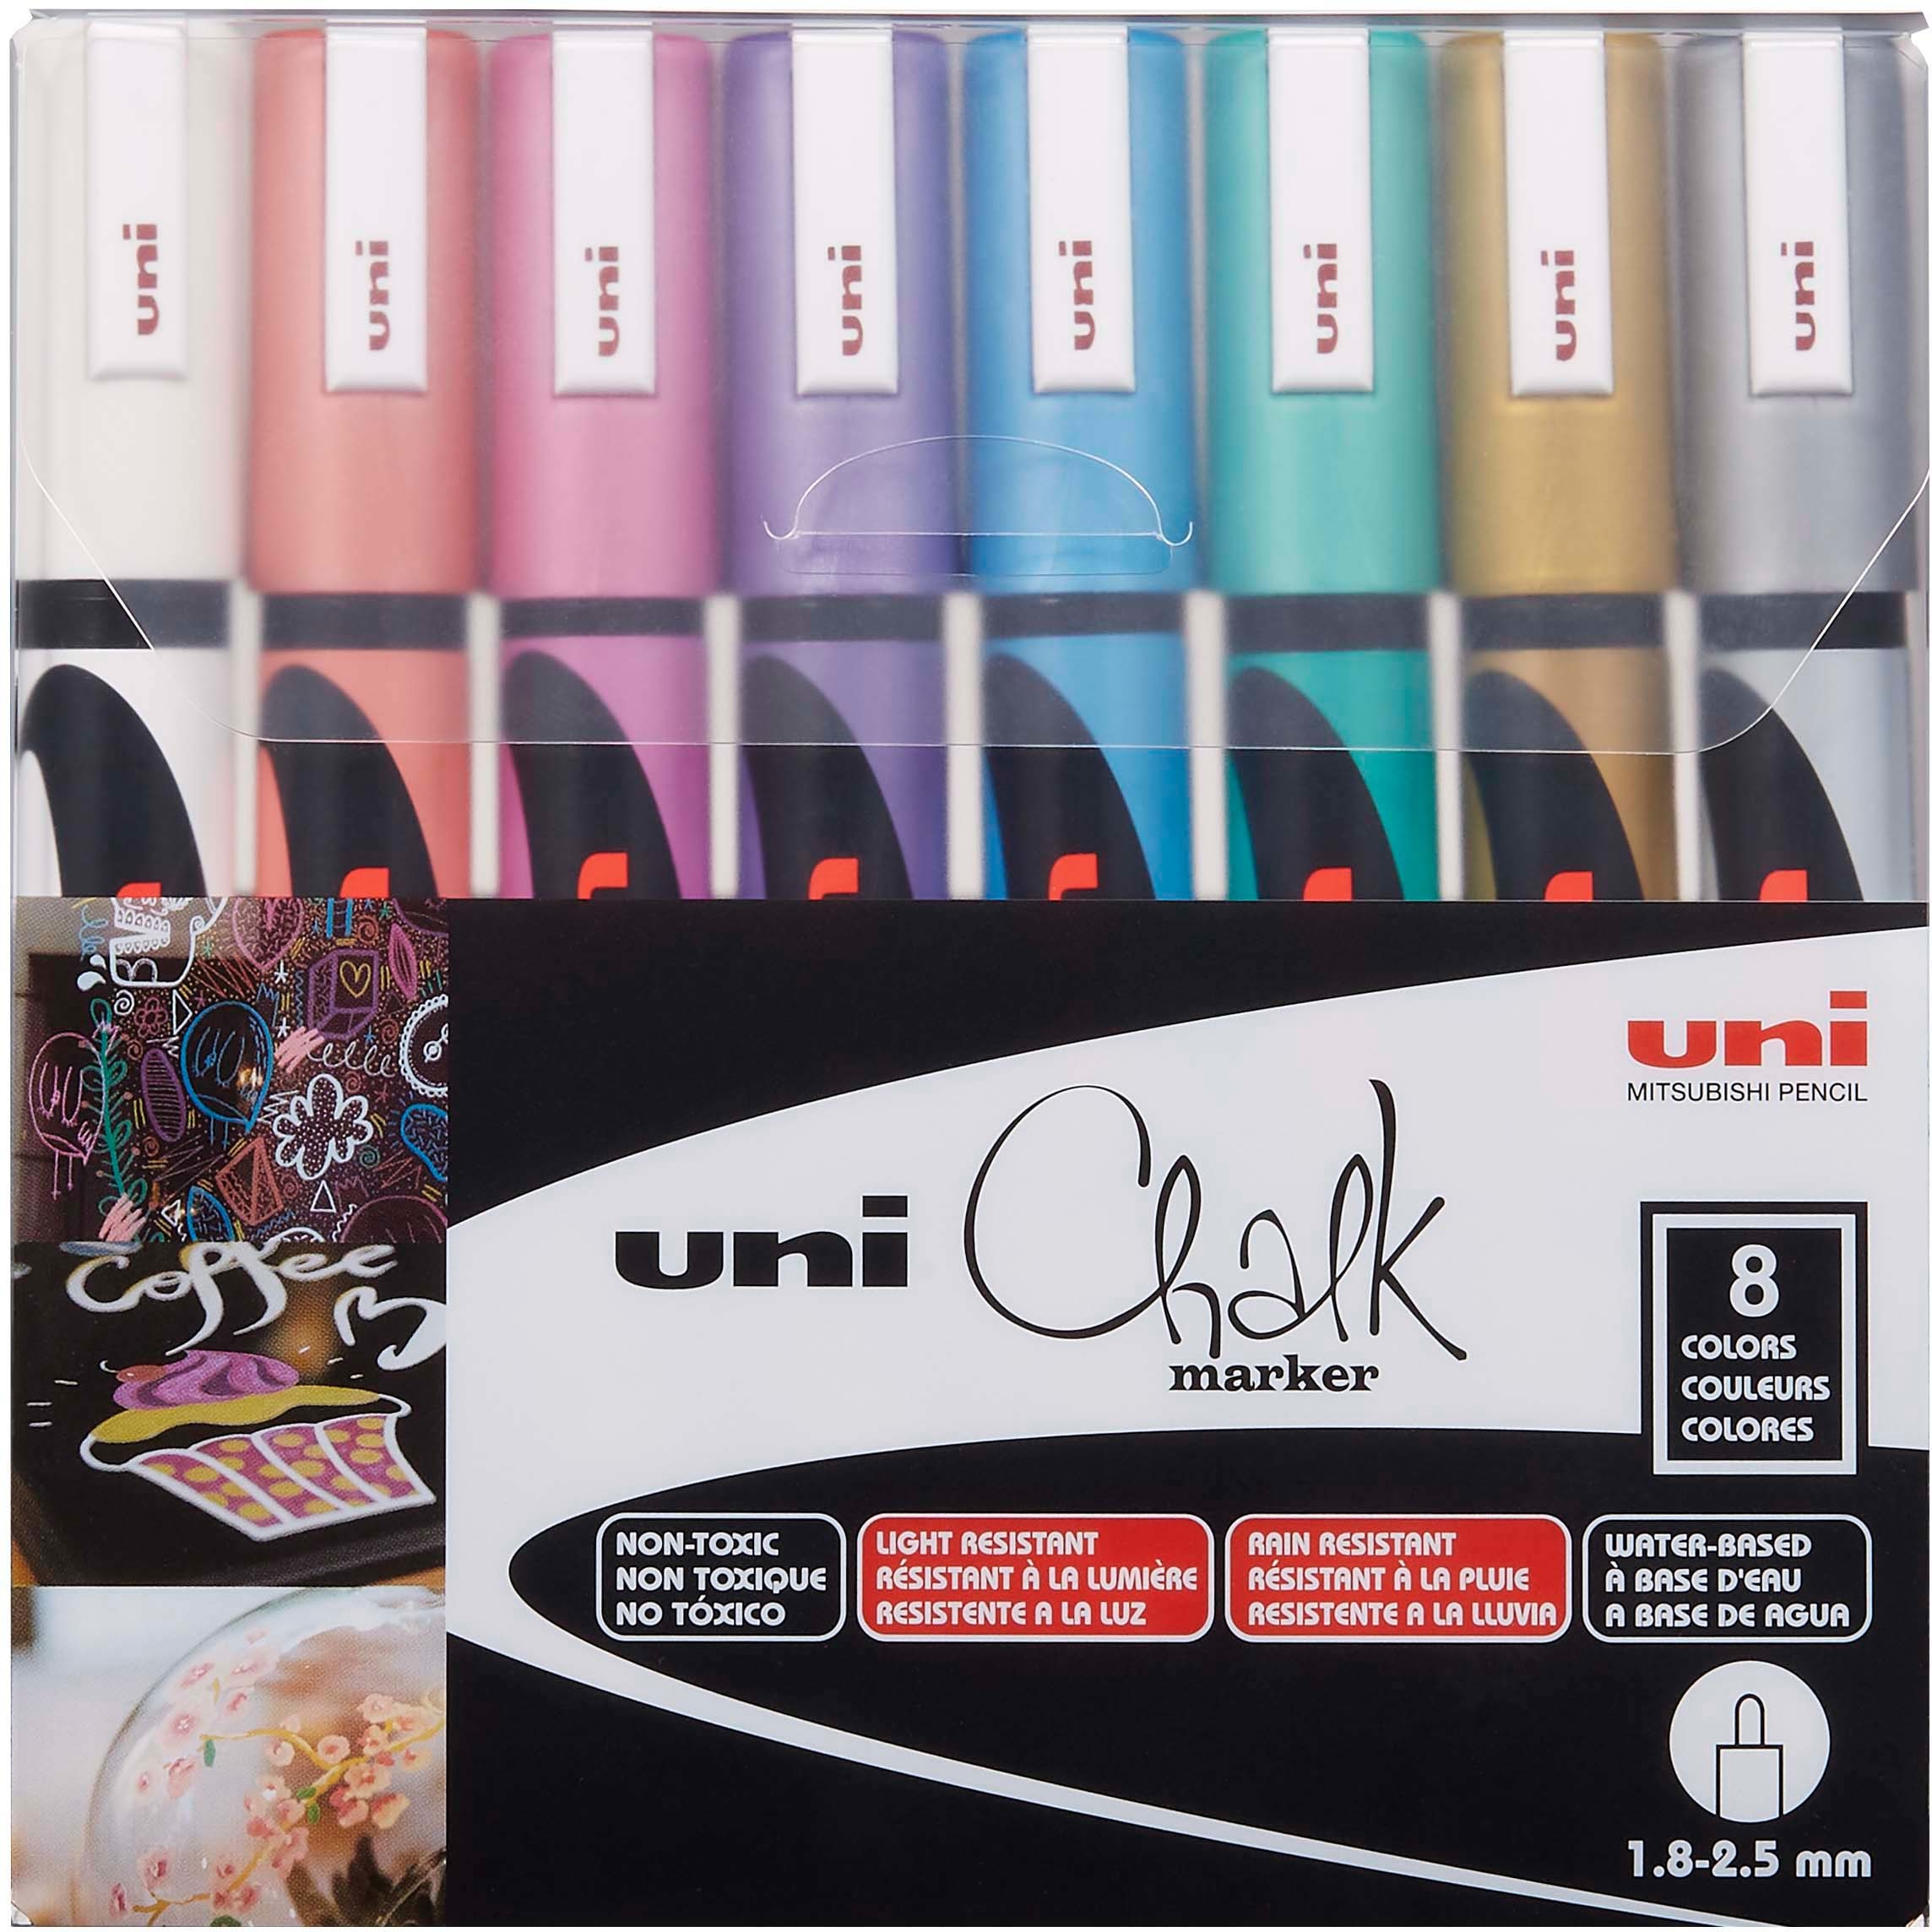 UNI-BALL Chalk Marker 1.8-2.5mm PWE-5M METALLIC 8C 8 pcs. ass.